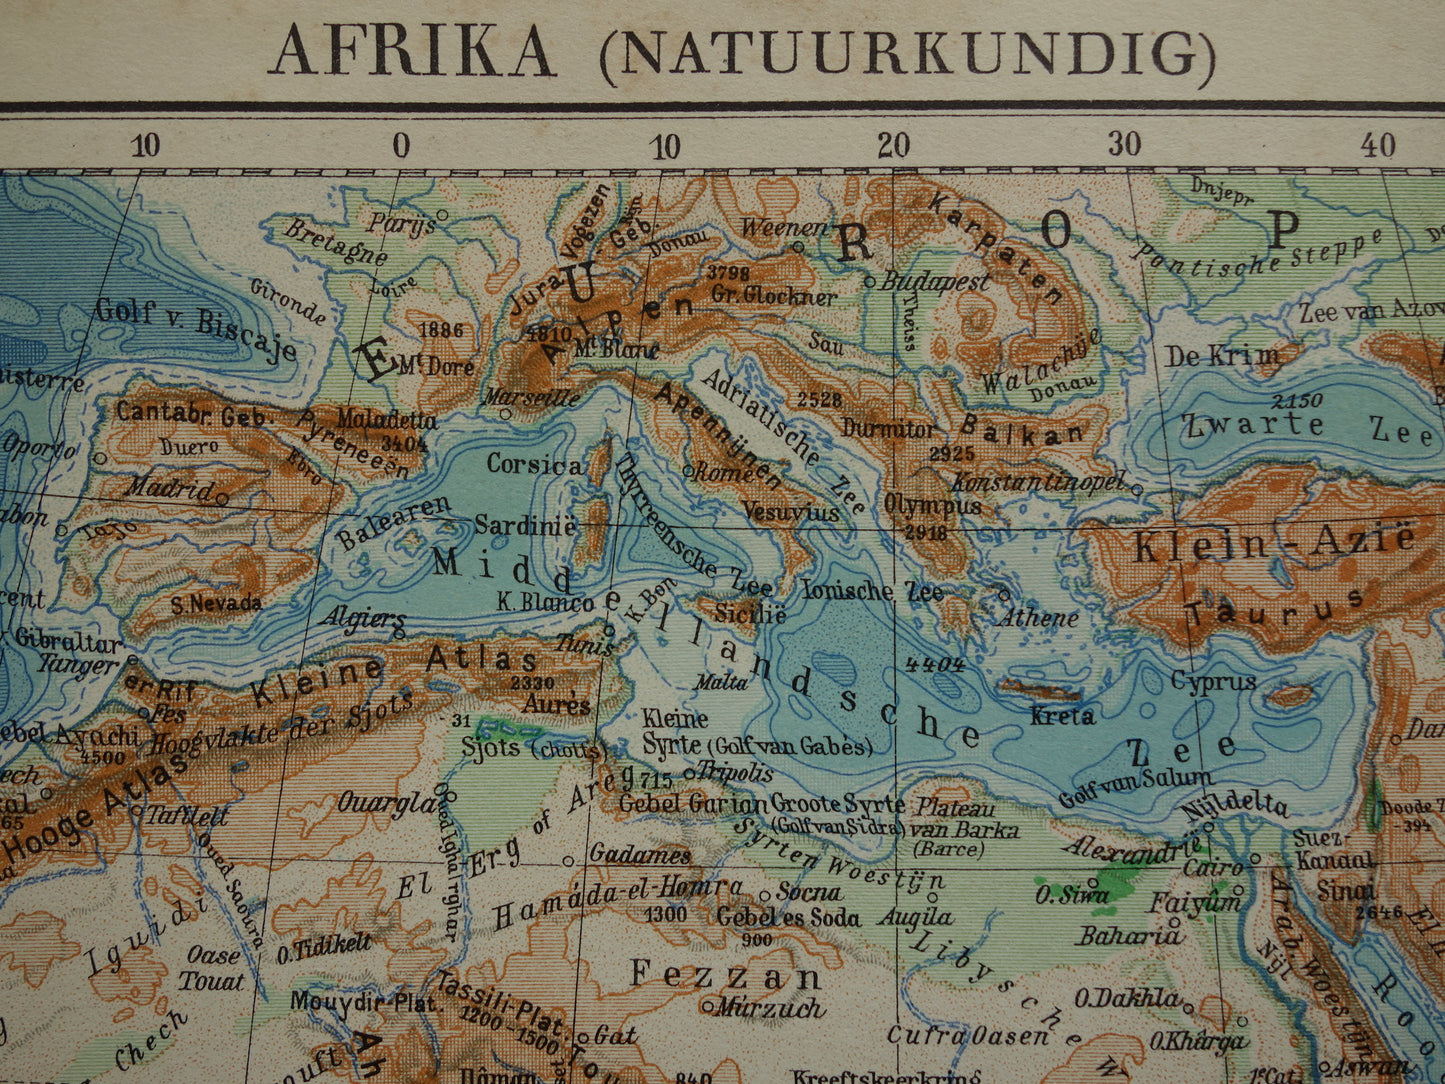 Oude natuurkundige kaart van Afrika uit 1932 originele vintage landkaart hoogtekaart van Afrika continent - oude Nederlandse kaarten